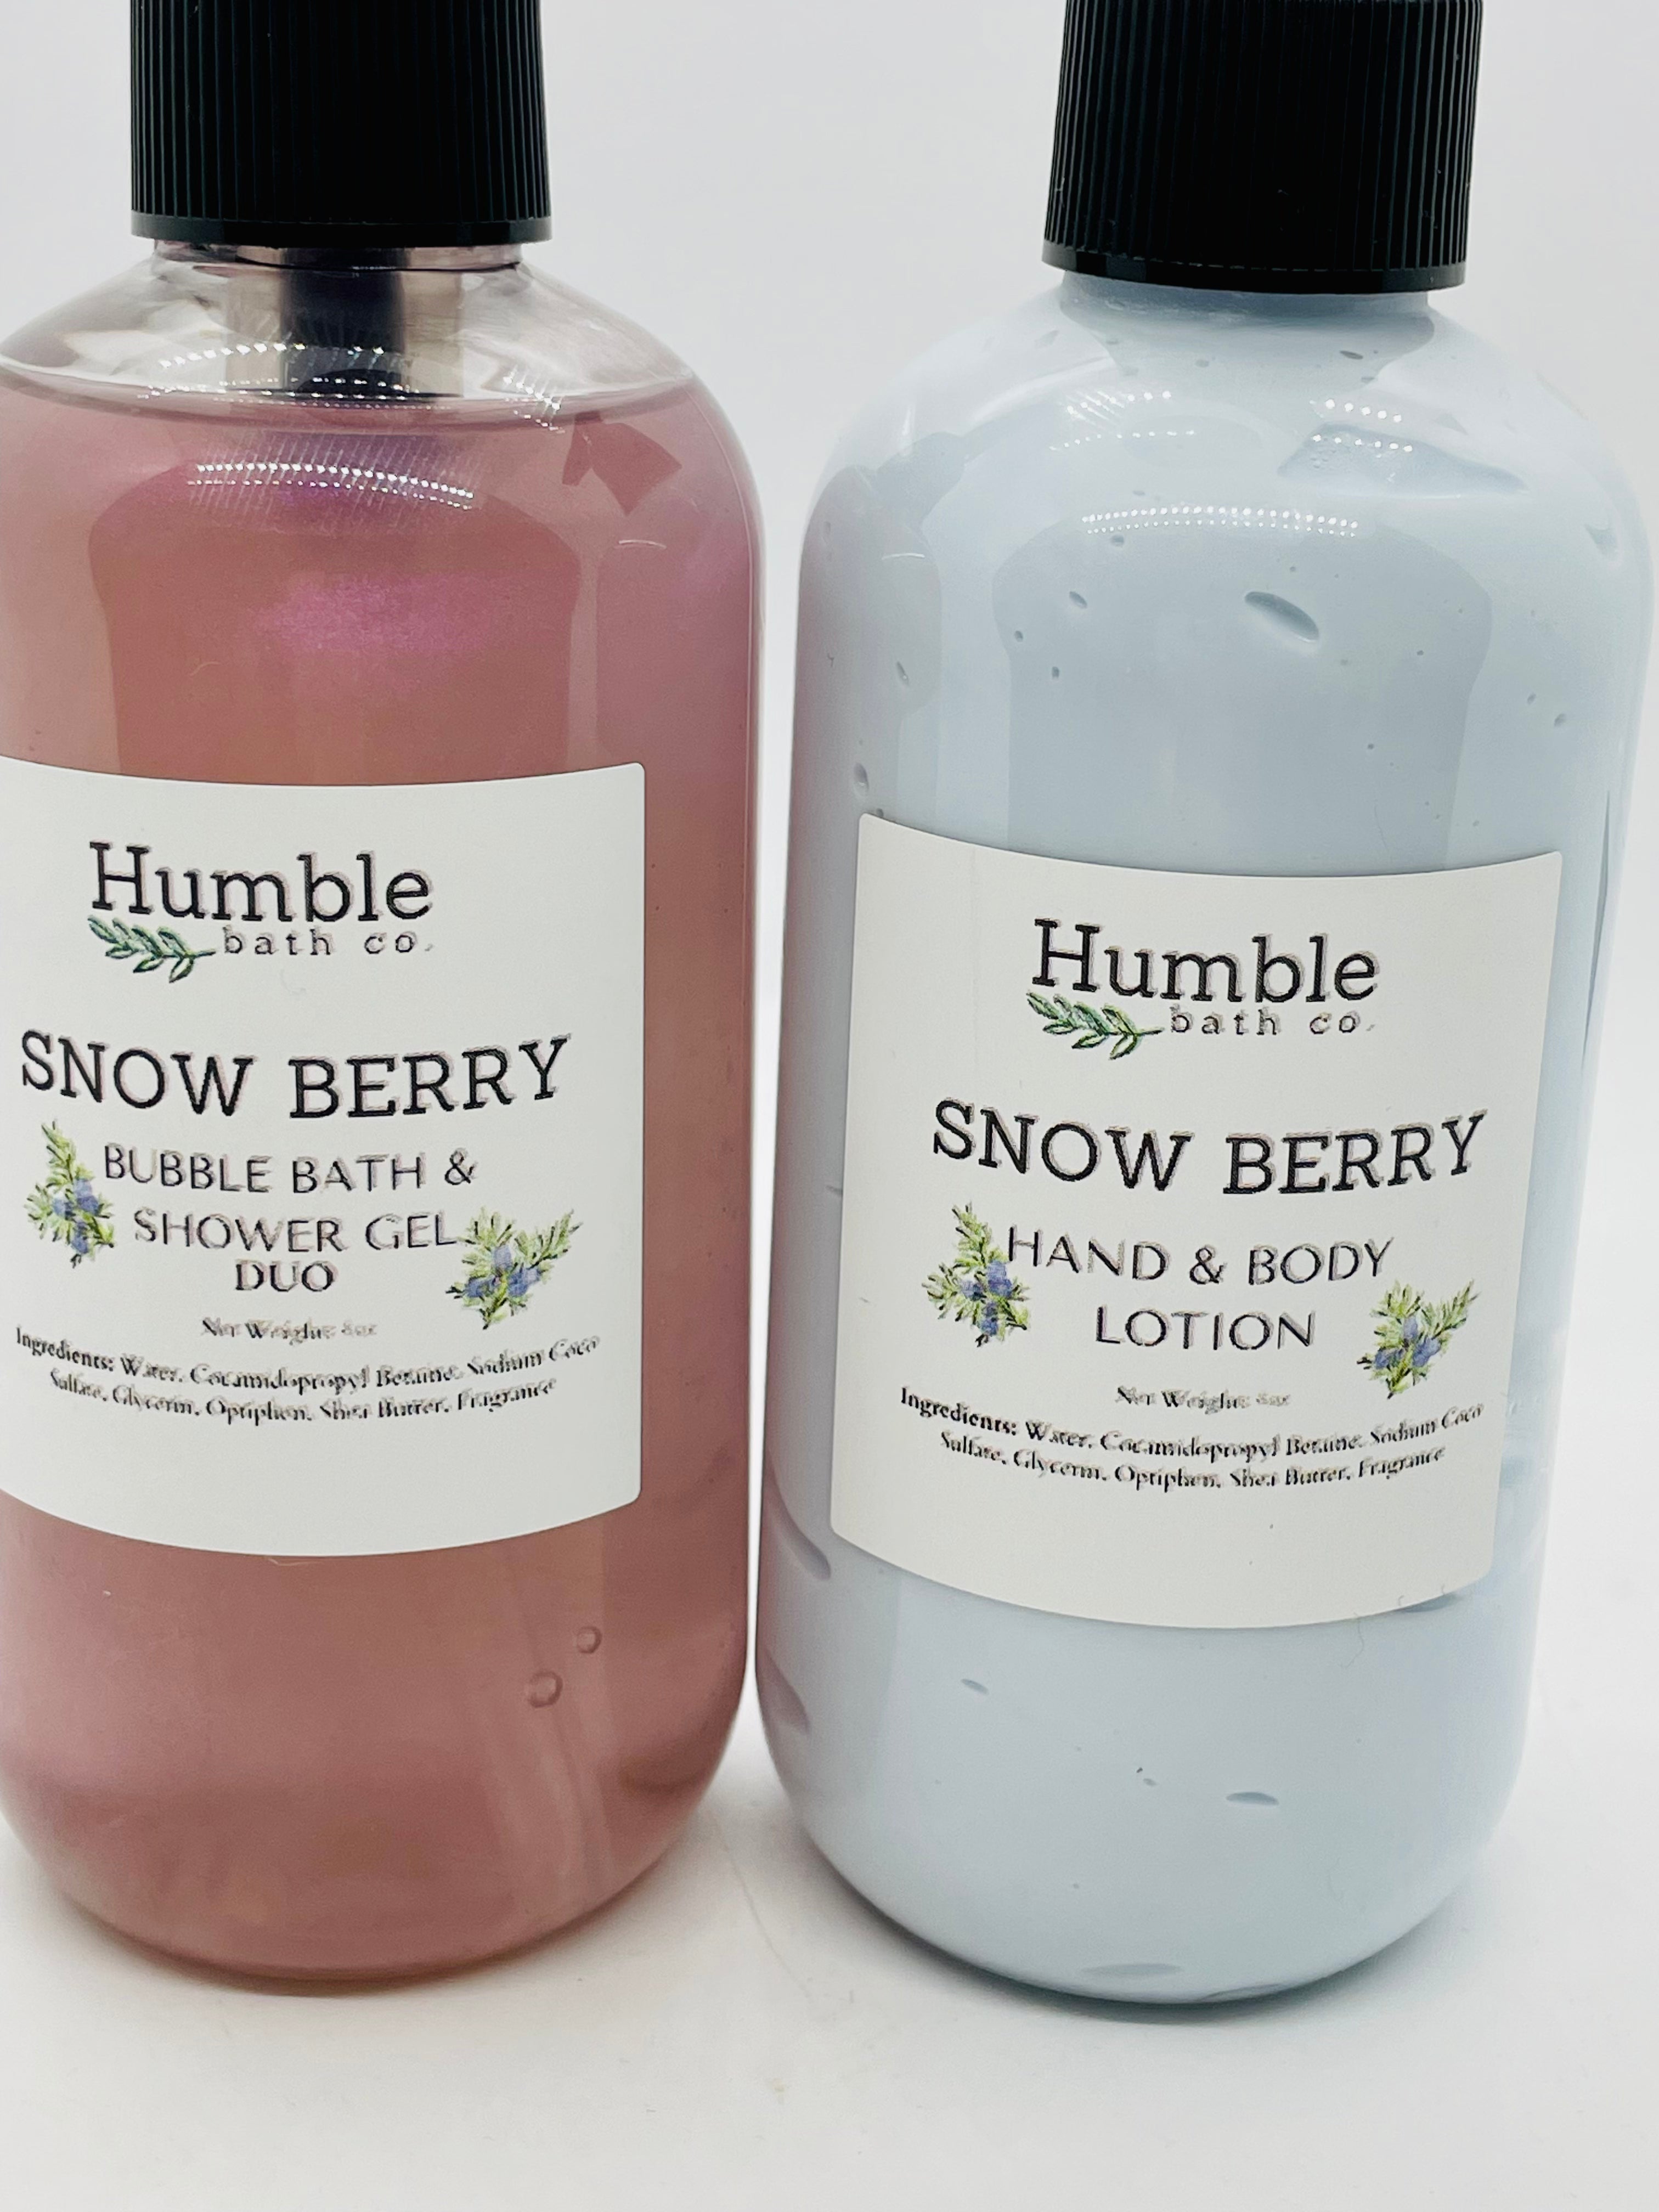 Snow Berry Bubble Bath & Shower Gel Duo